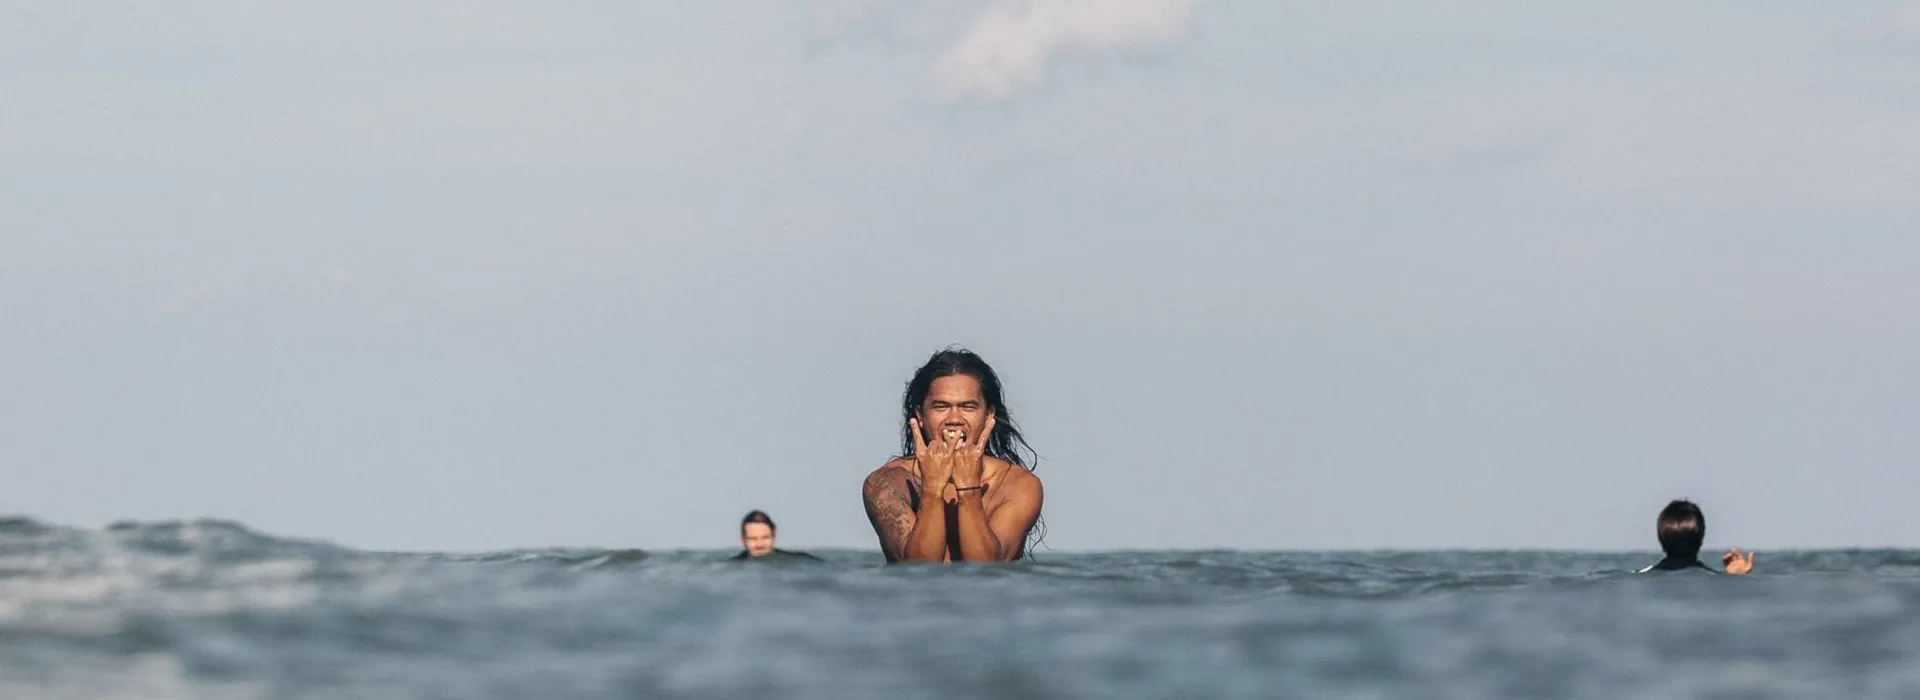 Contact us from Monday to Sunday | Kima Surf Bali & Sri Lanka